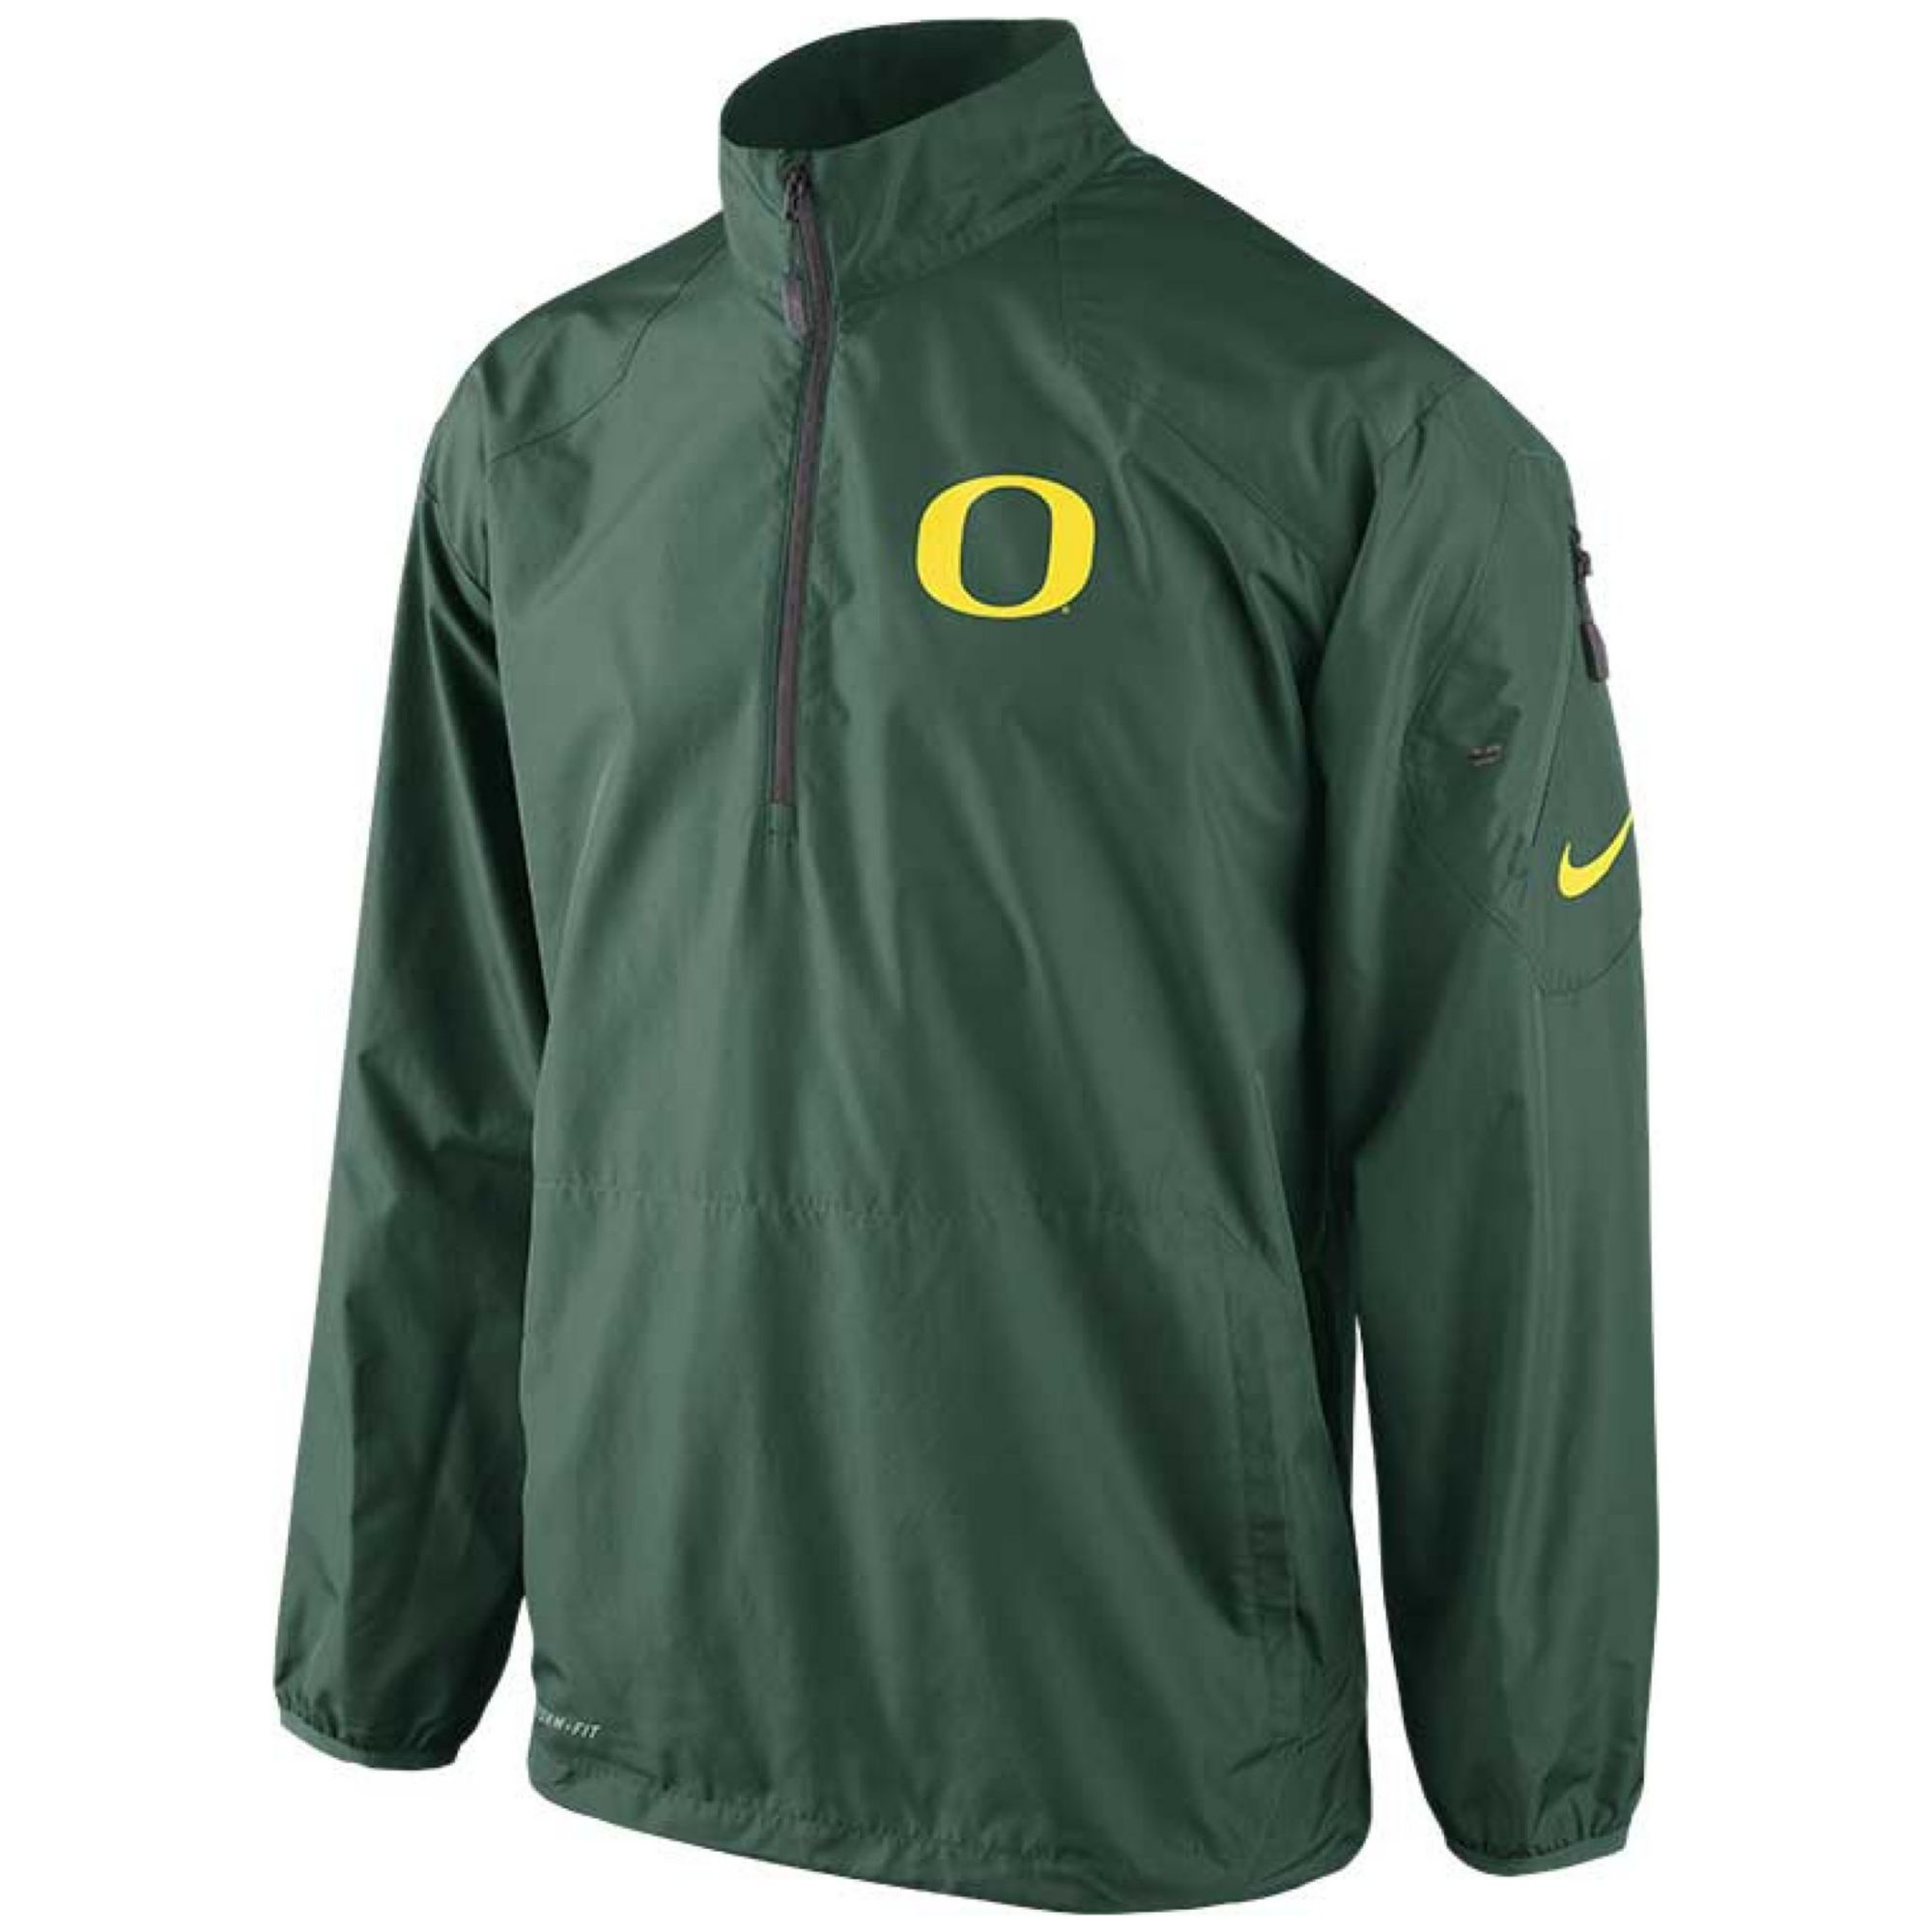 Lyst - Nike Mens Oregon Ducks Halfzip Pullover Jacket in Green for Men